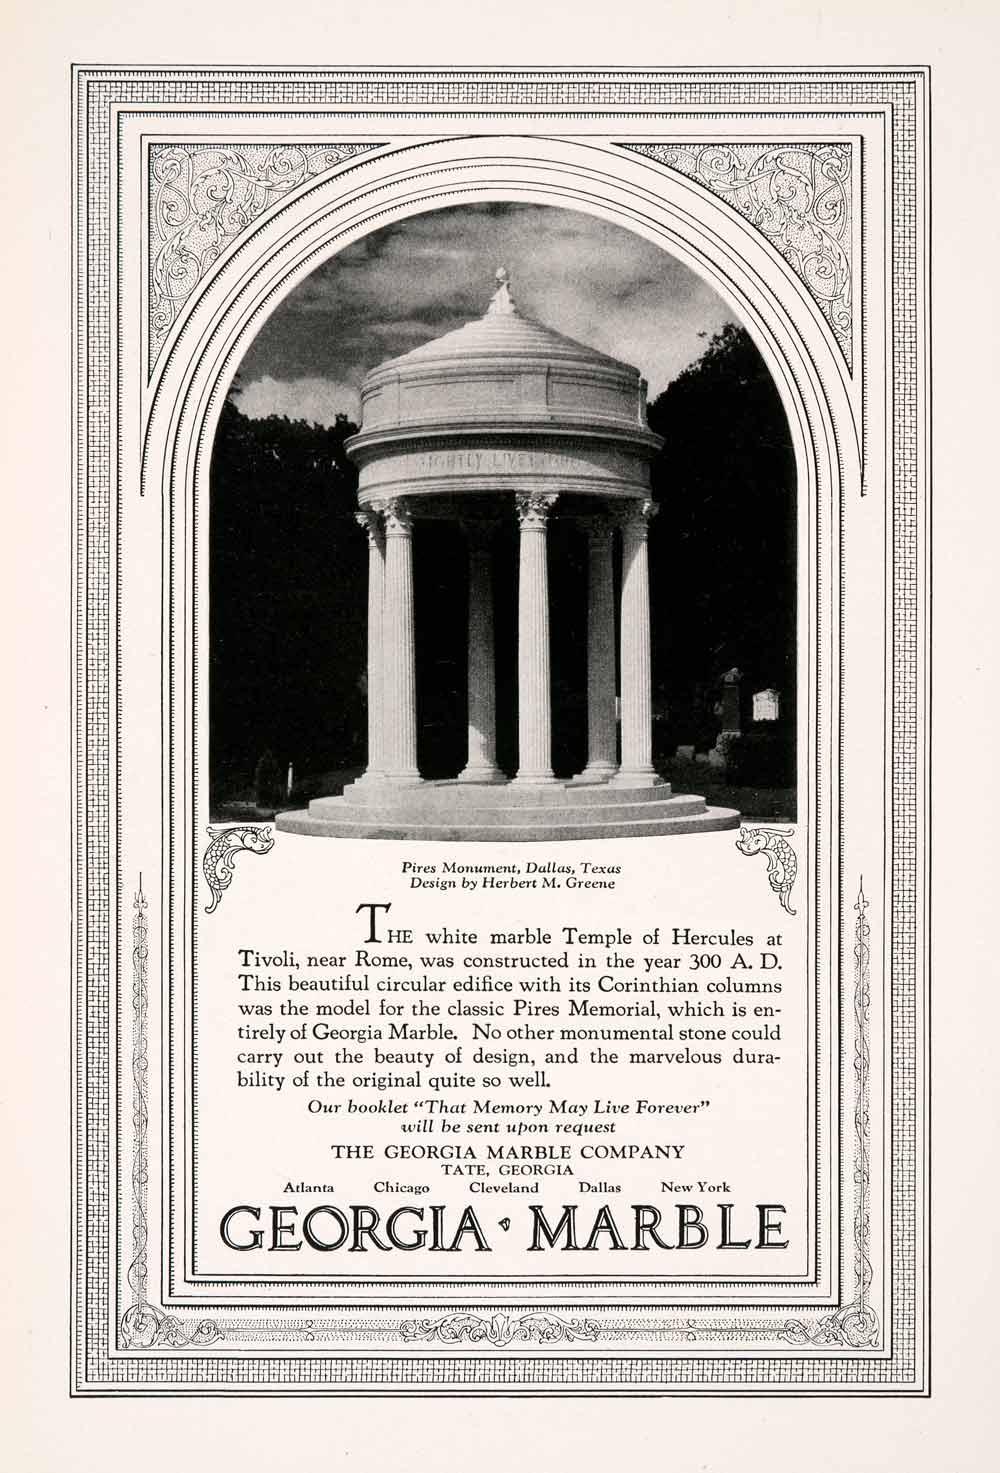 1929 Ad Georgia Marble Pires Monument Dallas Texas Herbert Greene NGM3